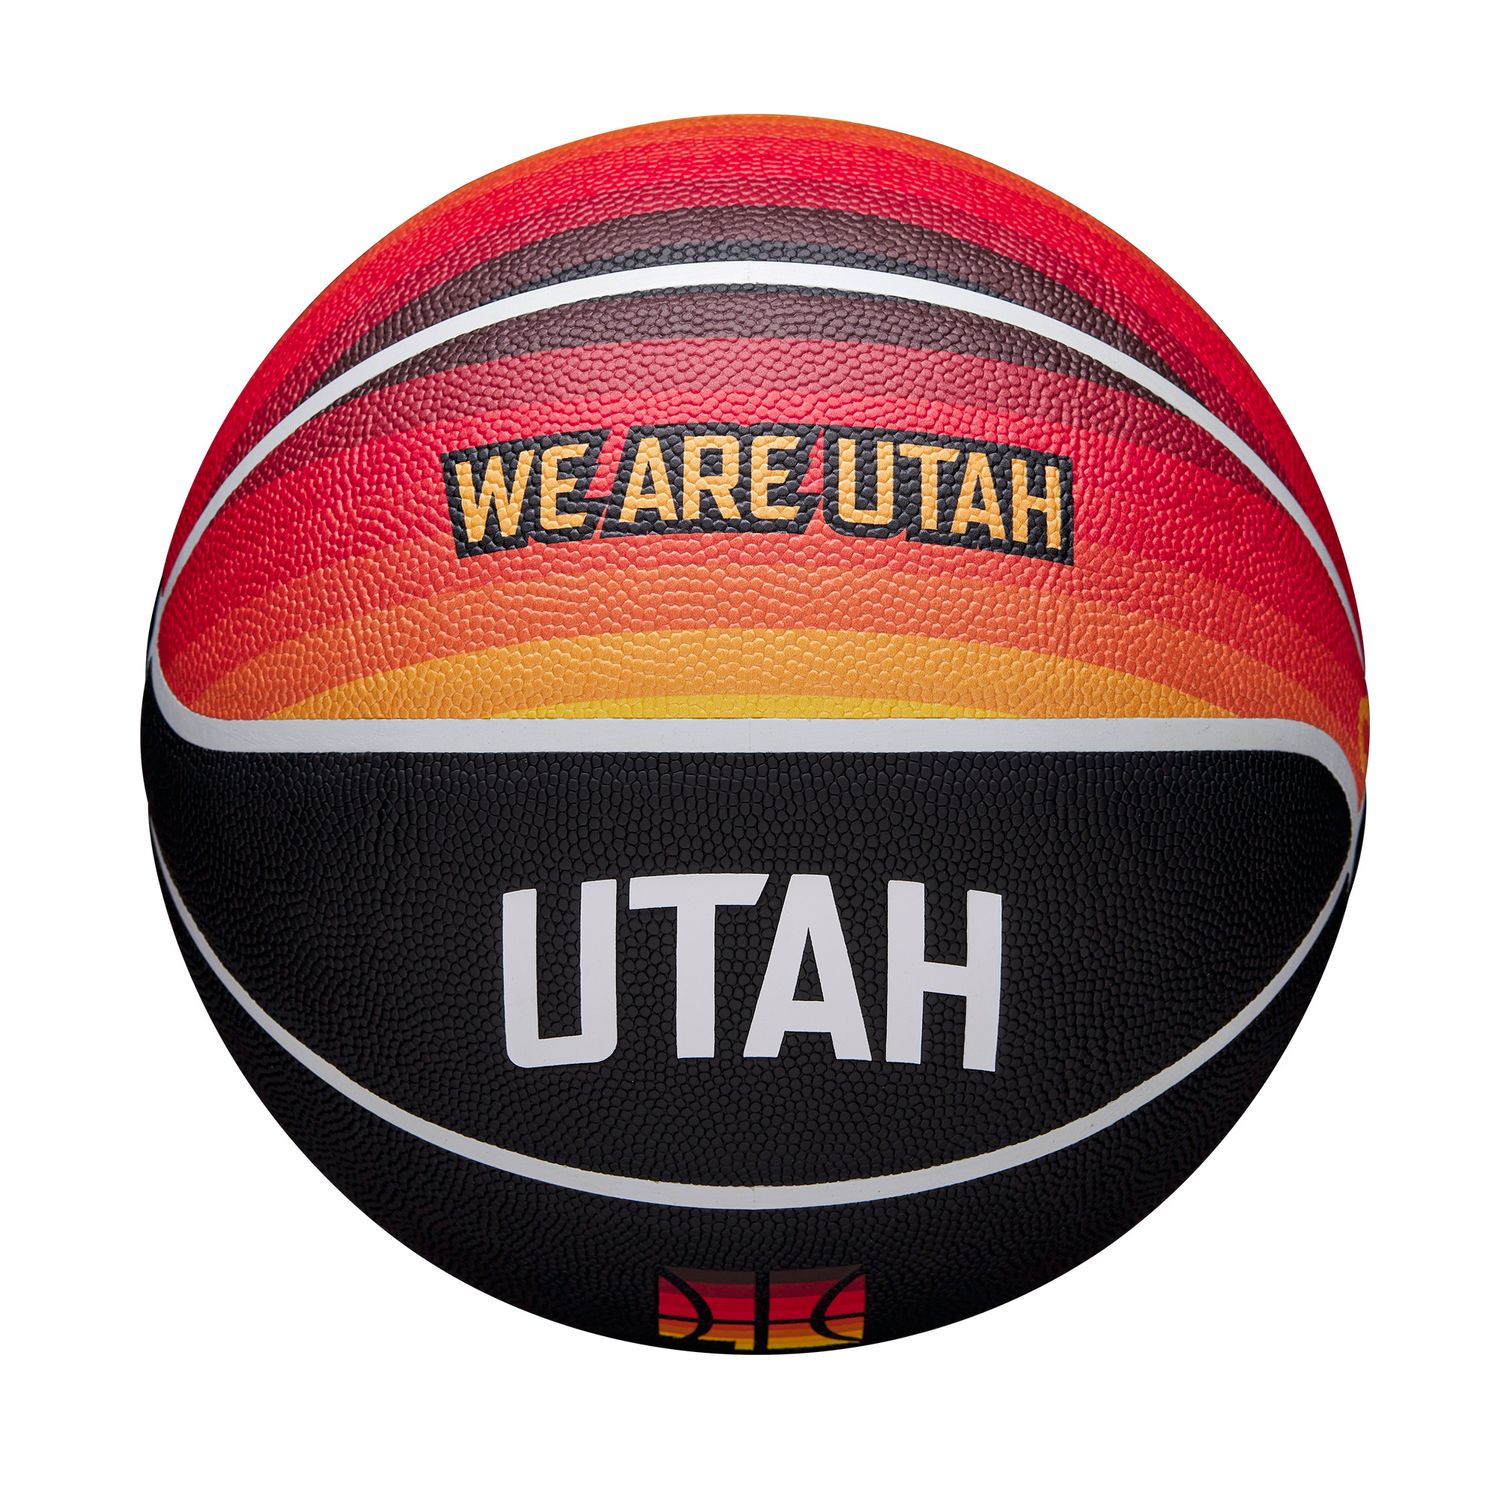 Wilson Utah Jazz NBA NBA 75th City Collector Basketball